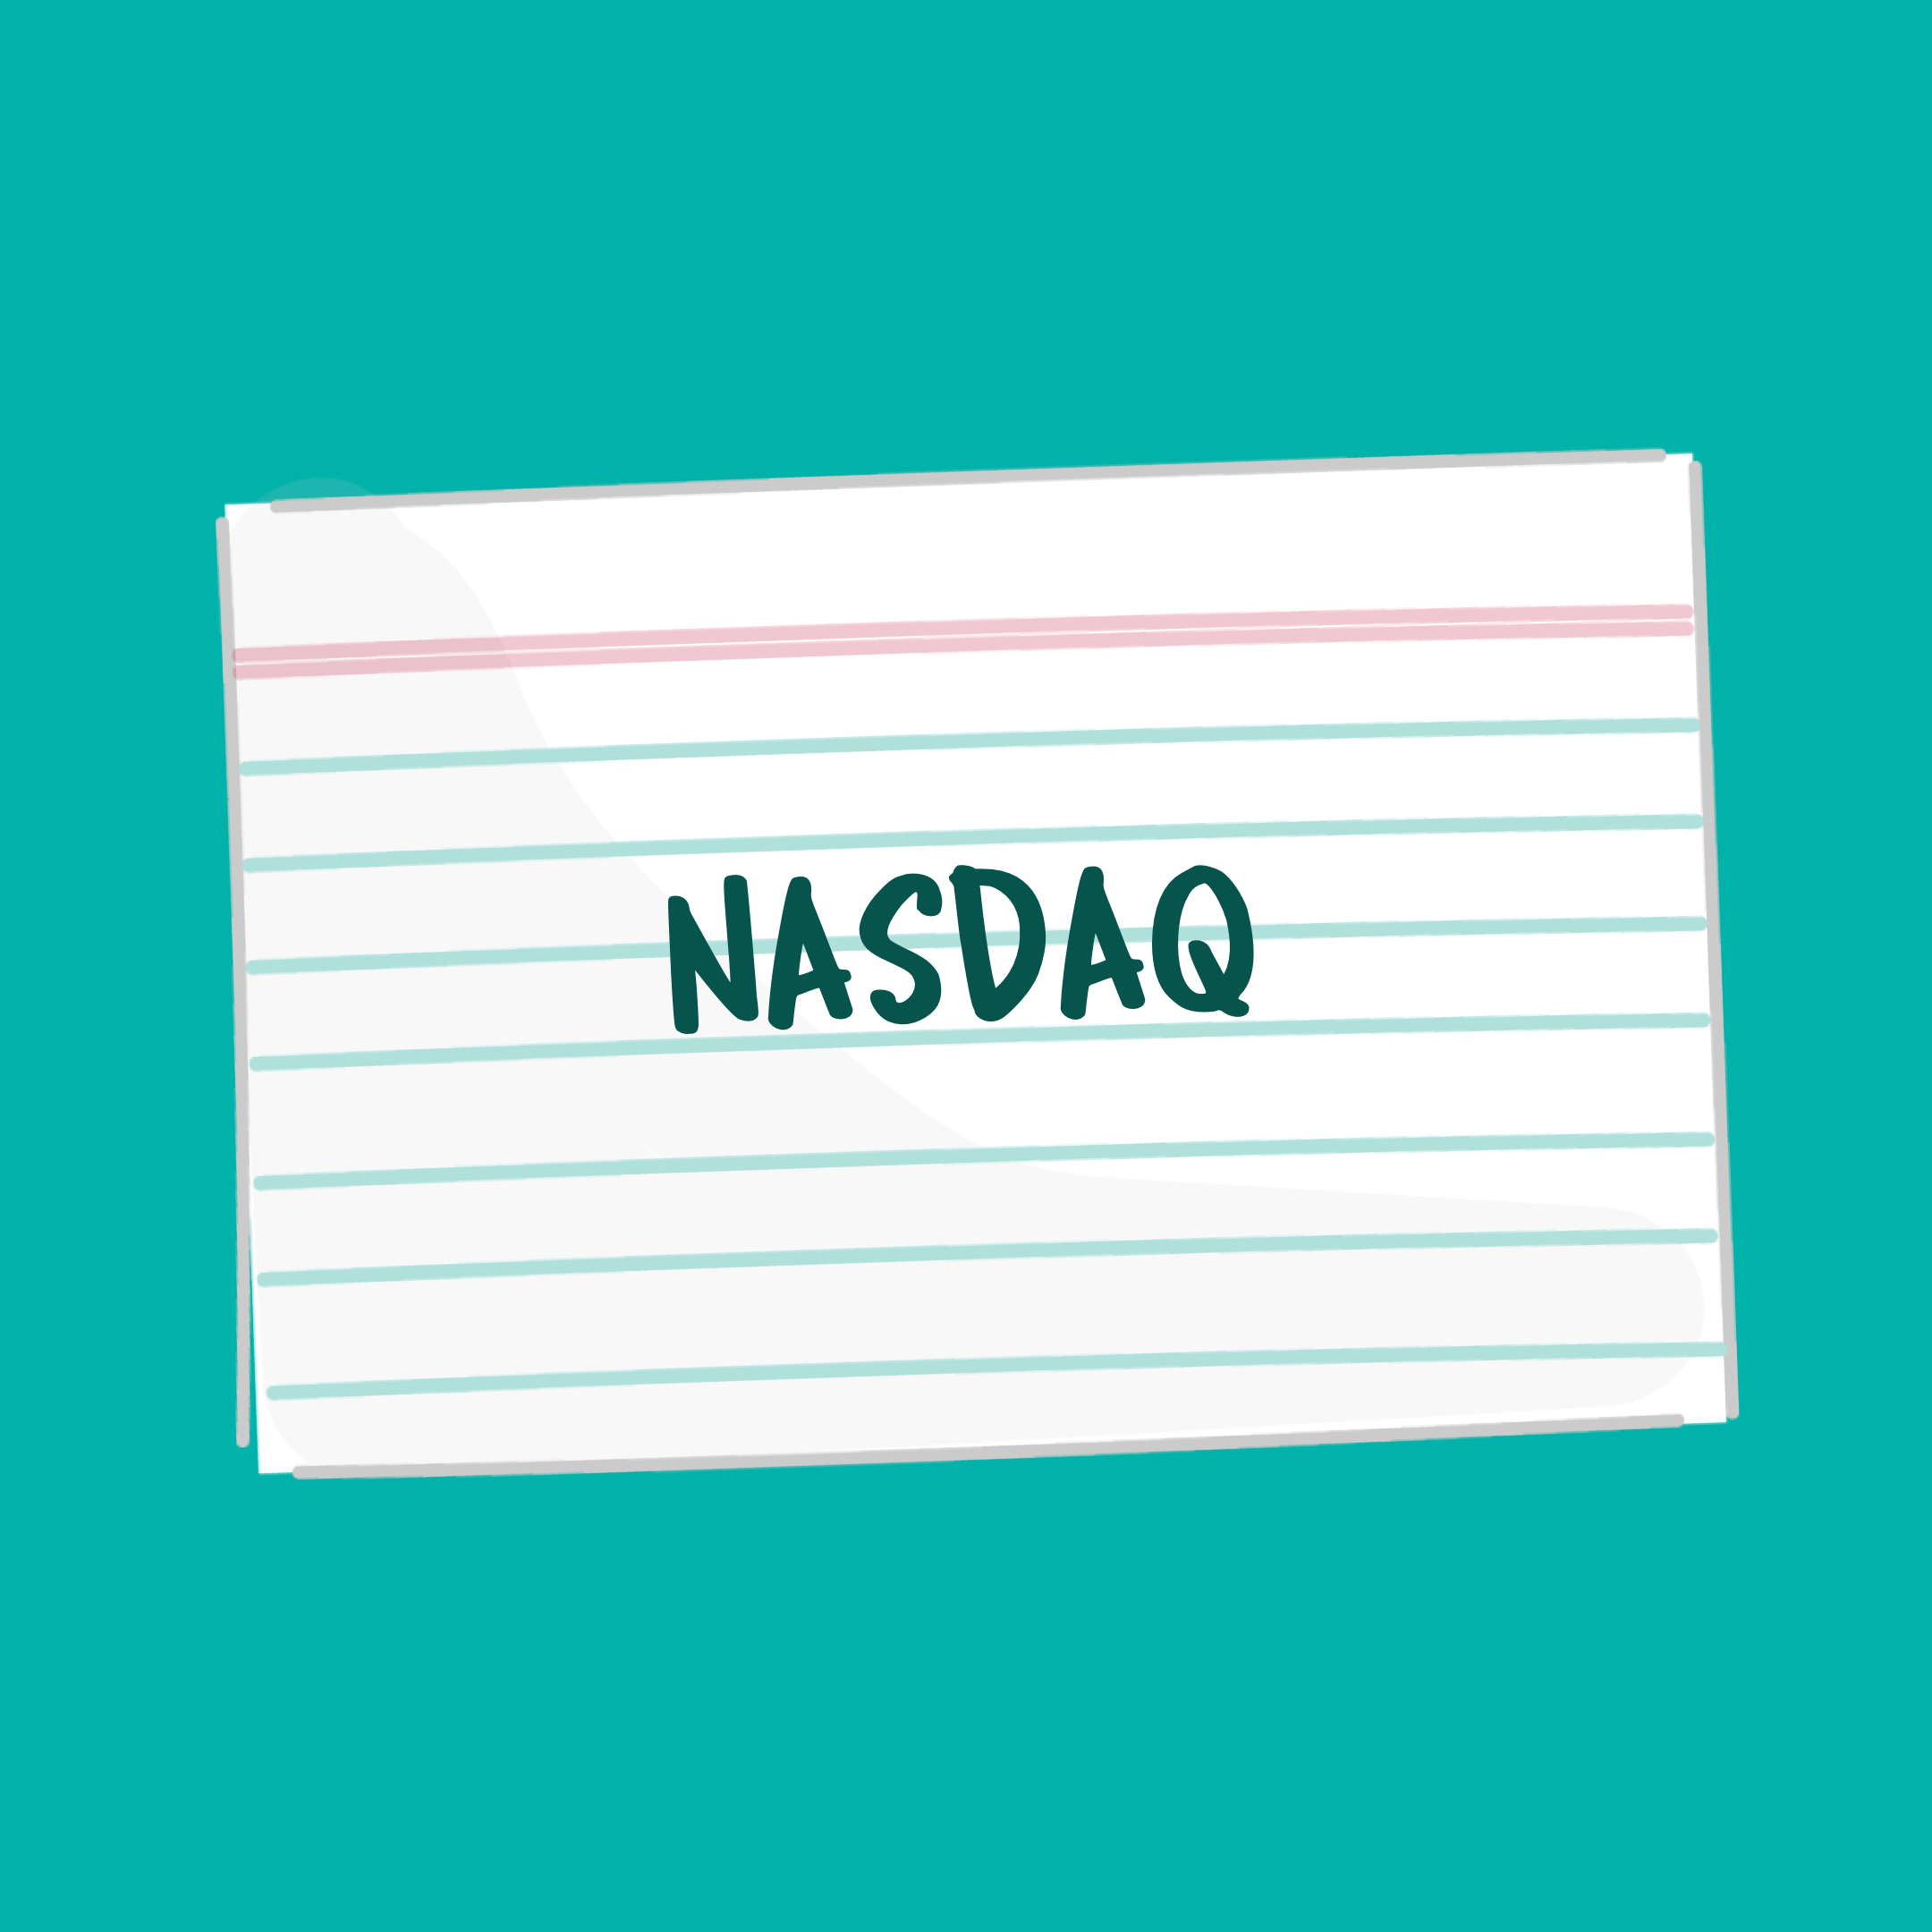 NASDAQ card